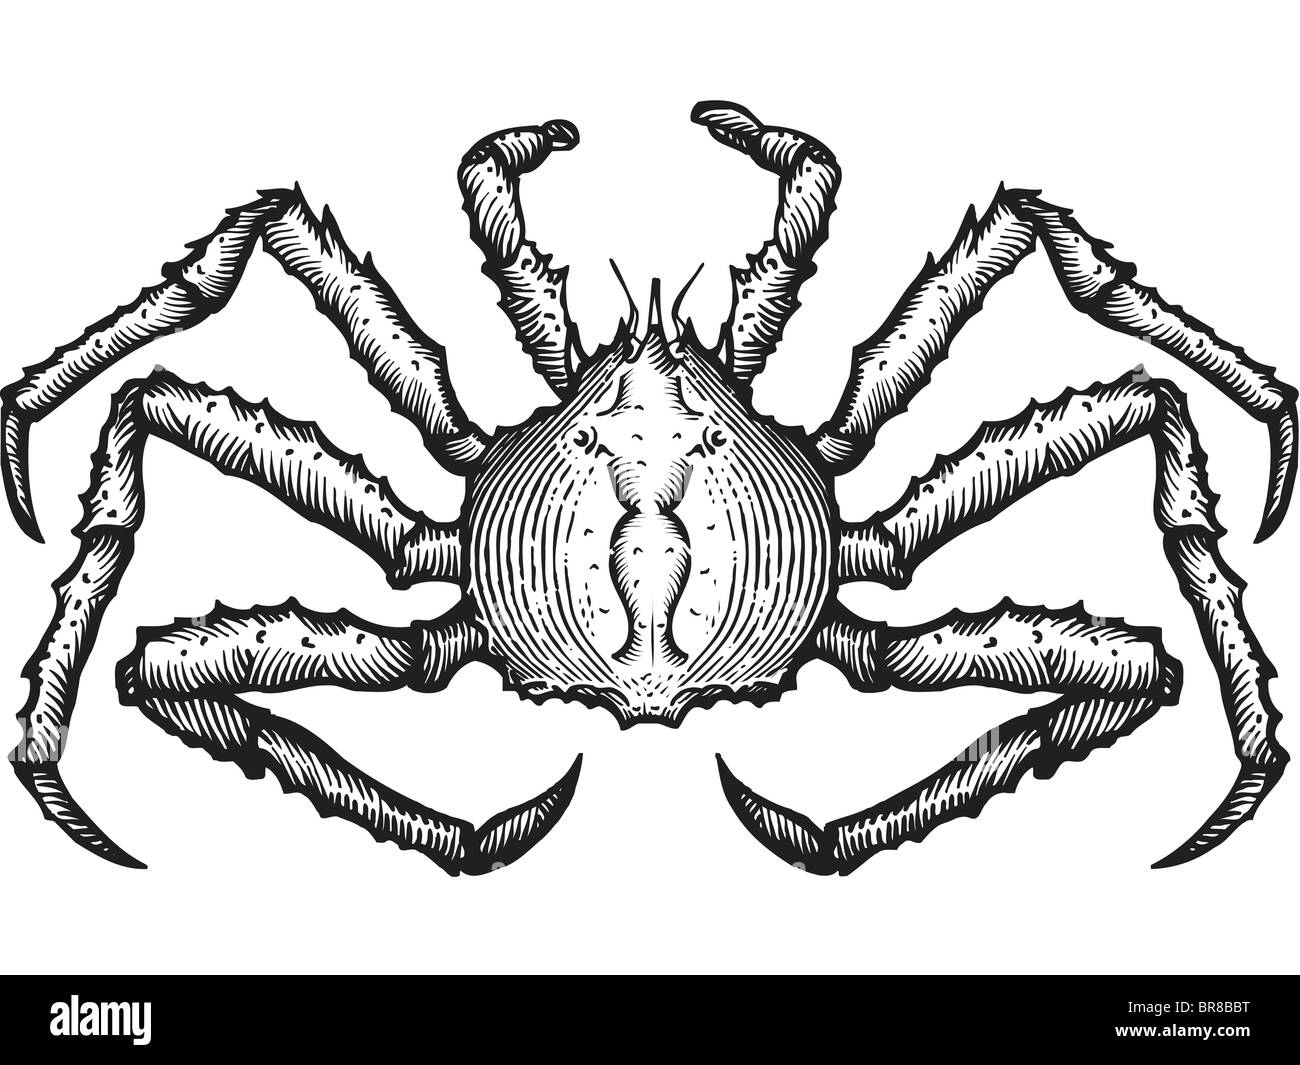 king crab clipart - photo #46